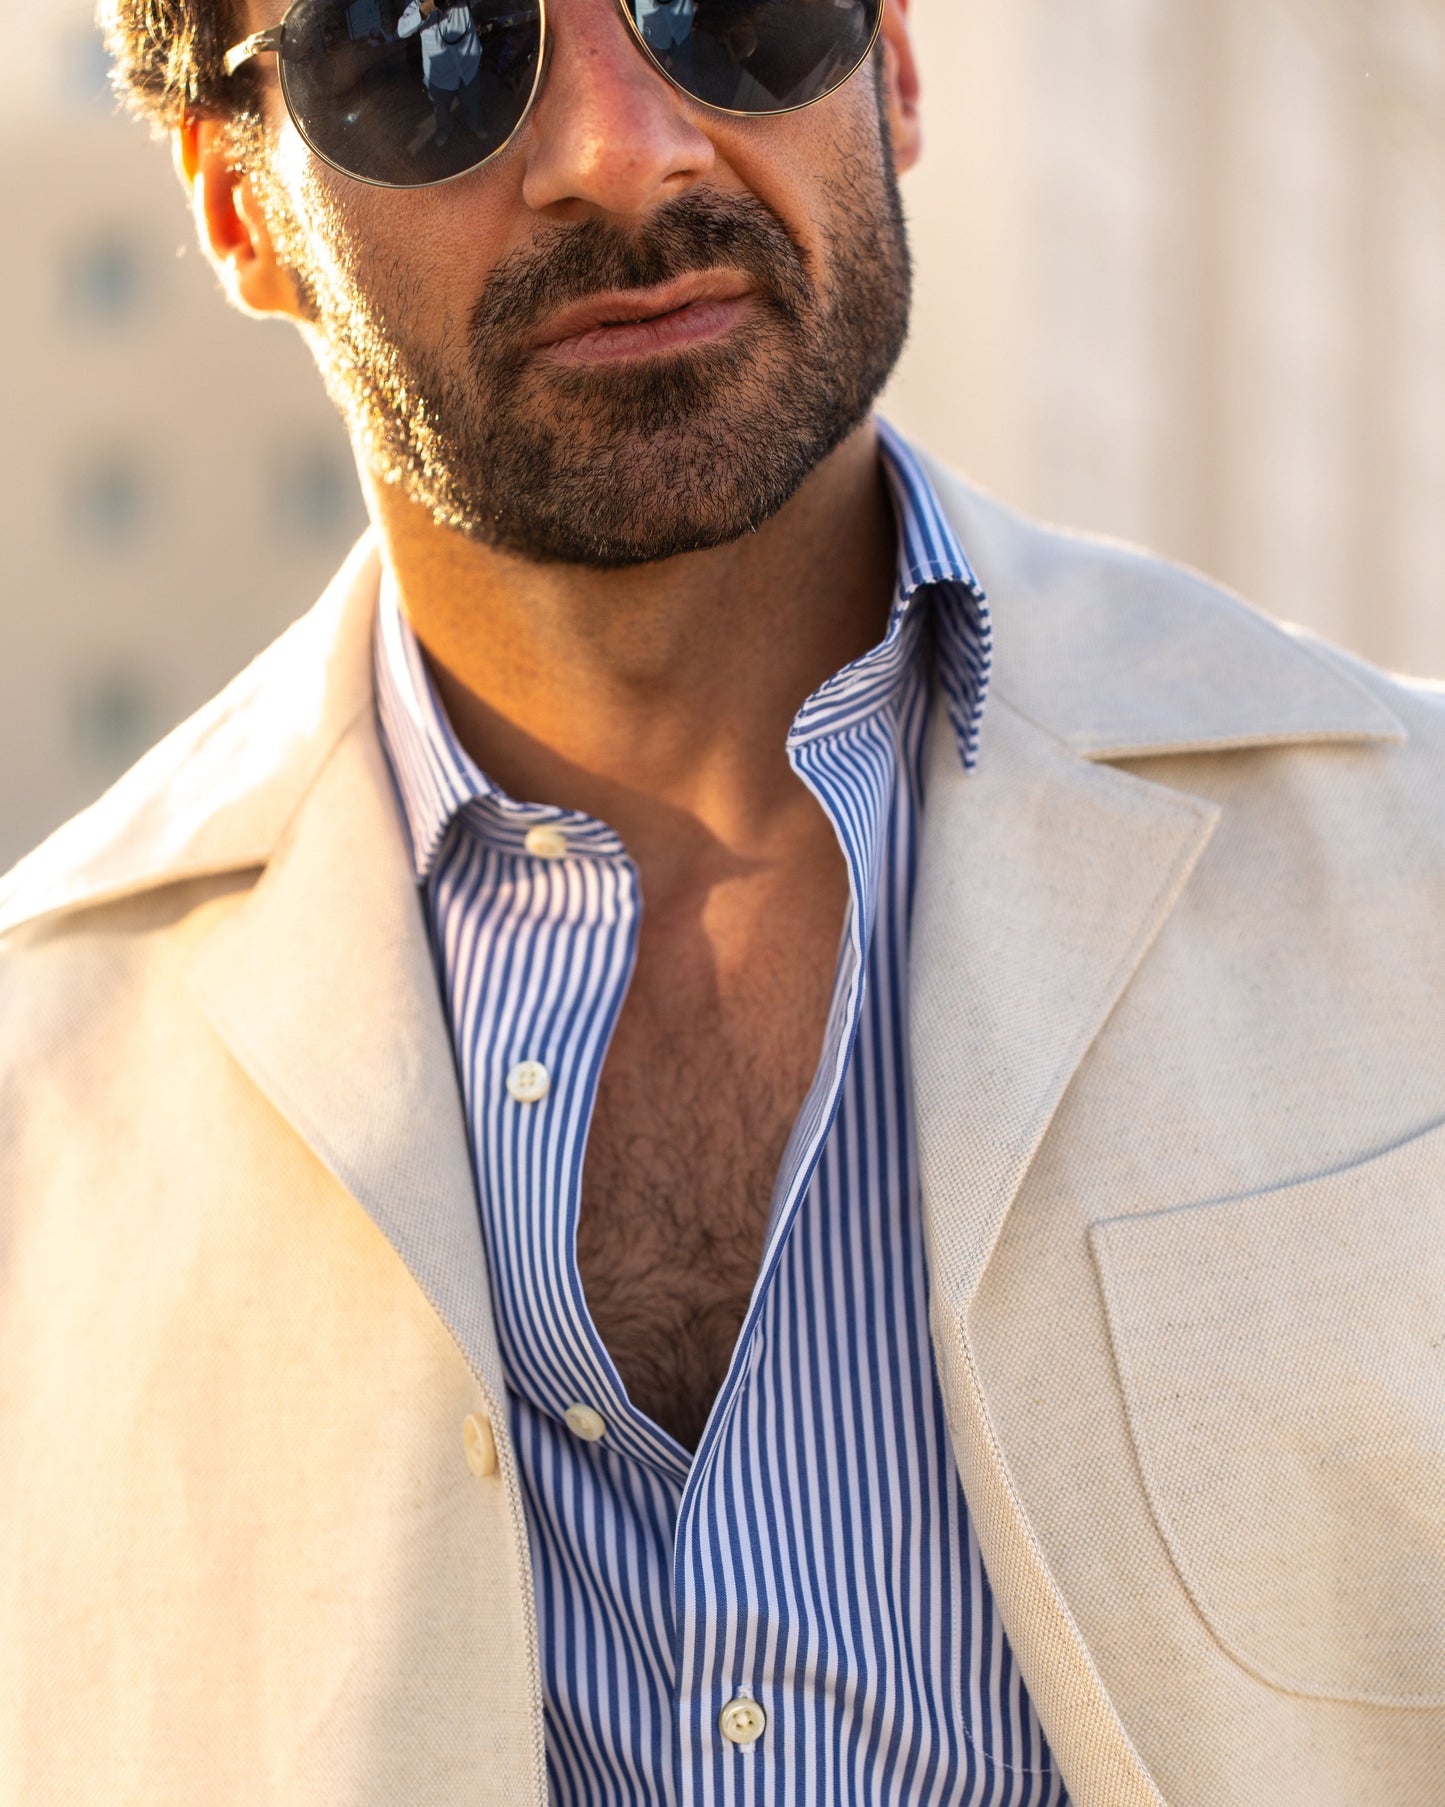 Model outside wearing the linen shirt jacket for men by Luxire in cream wearing sunglasses